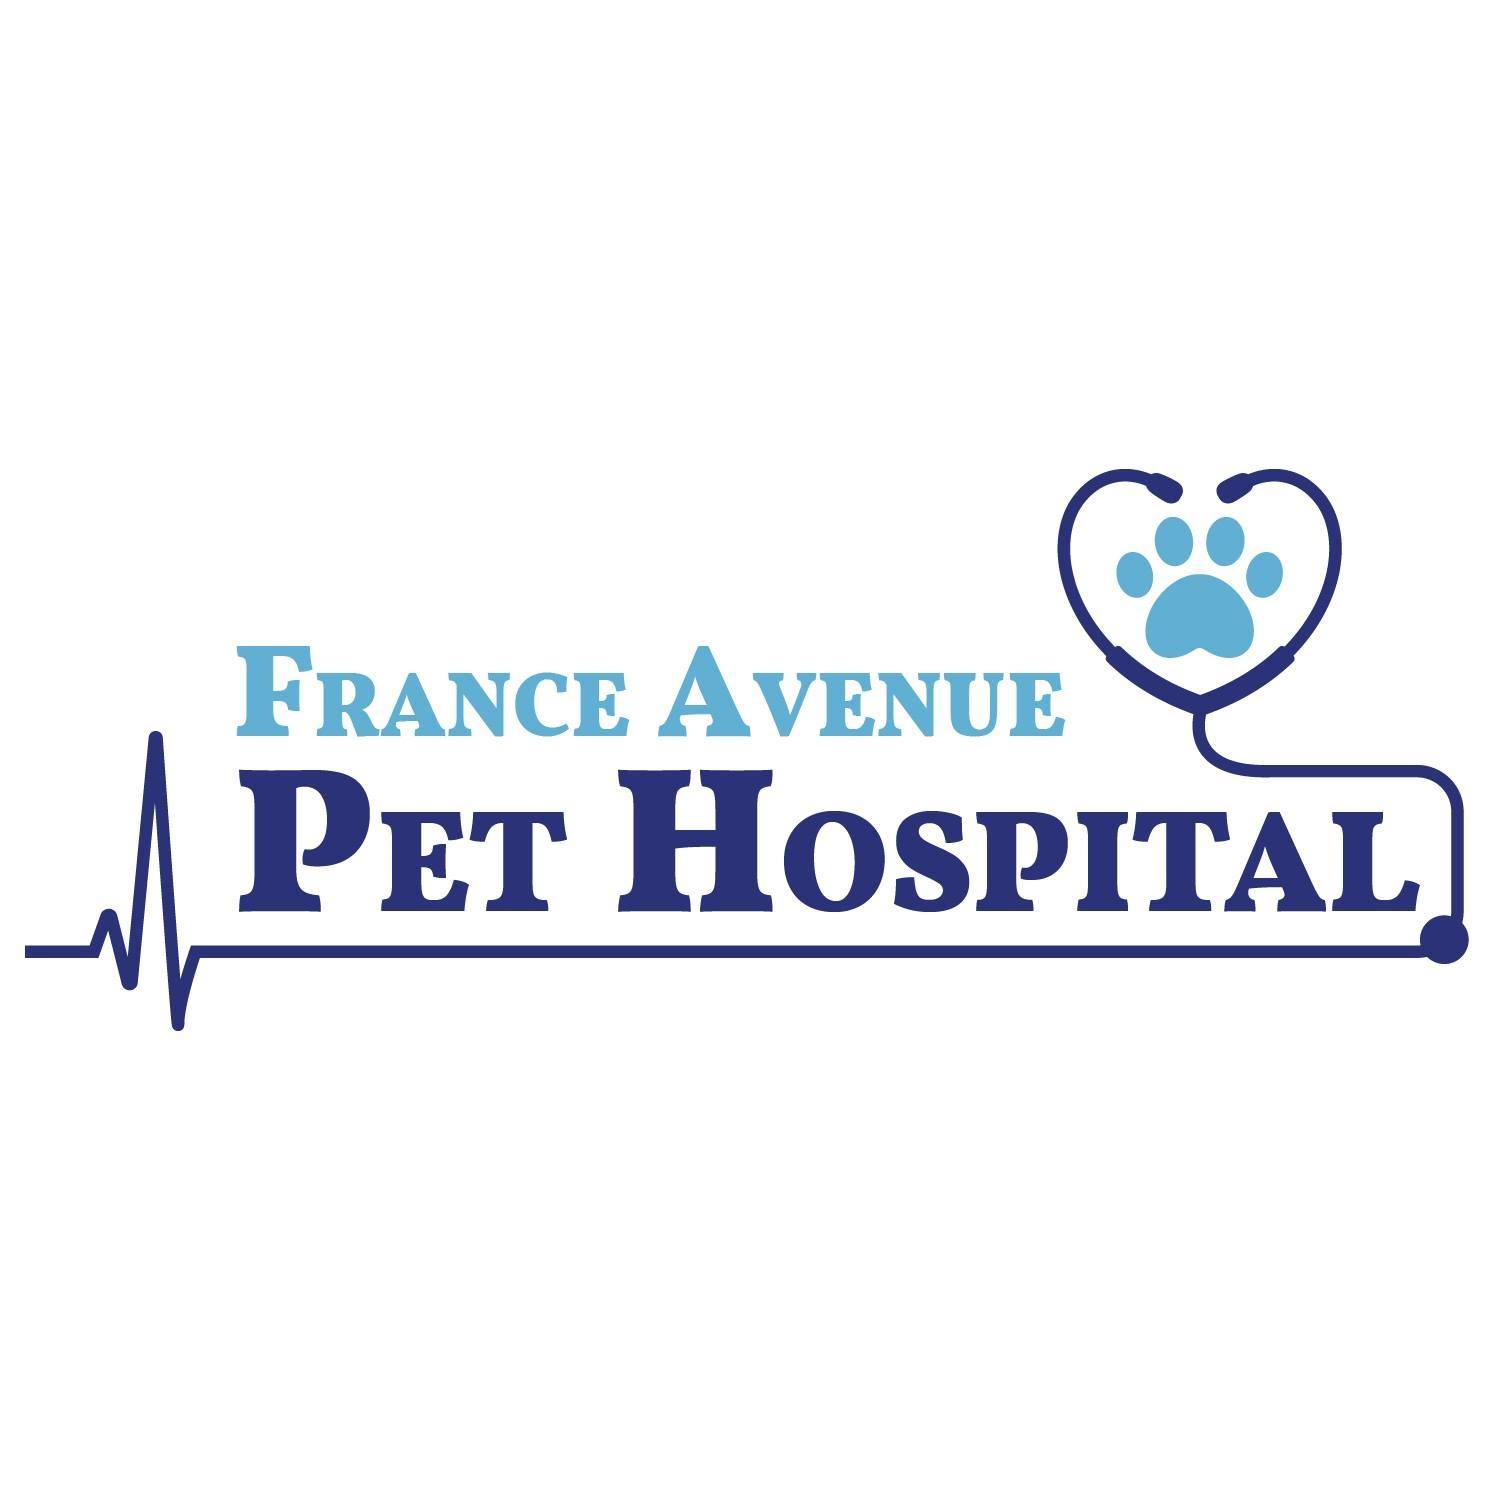 France Ave Pet Hospital